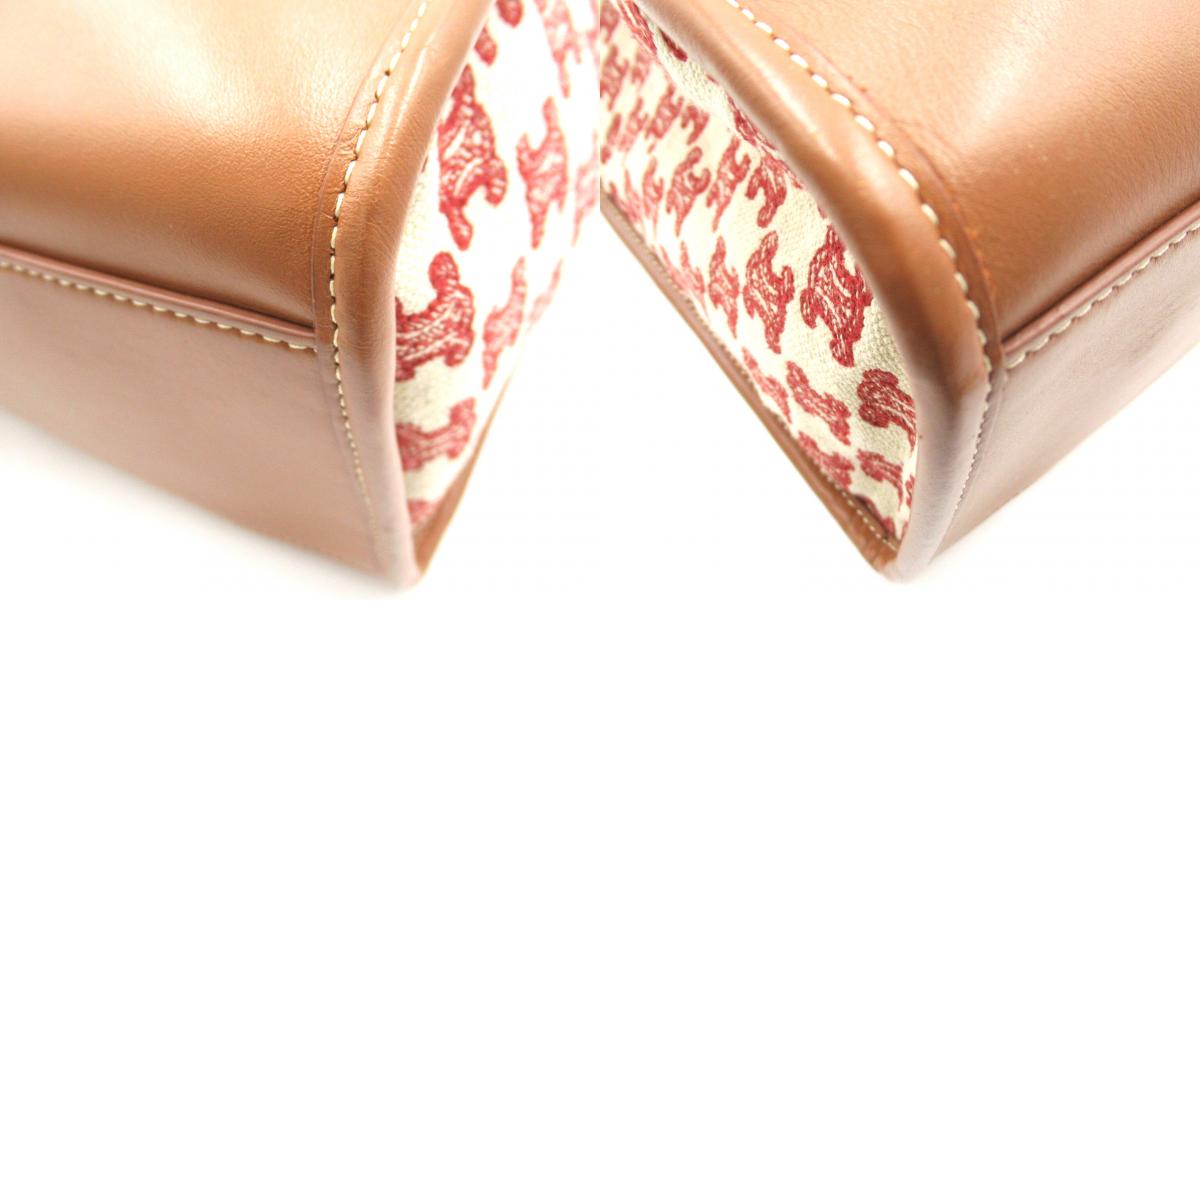 Celine Horizontal Cover Tote Bag Canvas Lace  Beige/Brown Lace